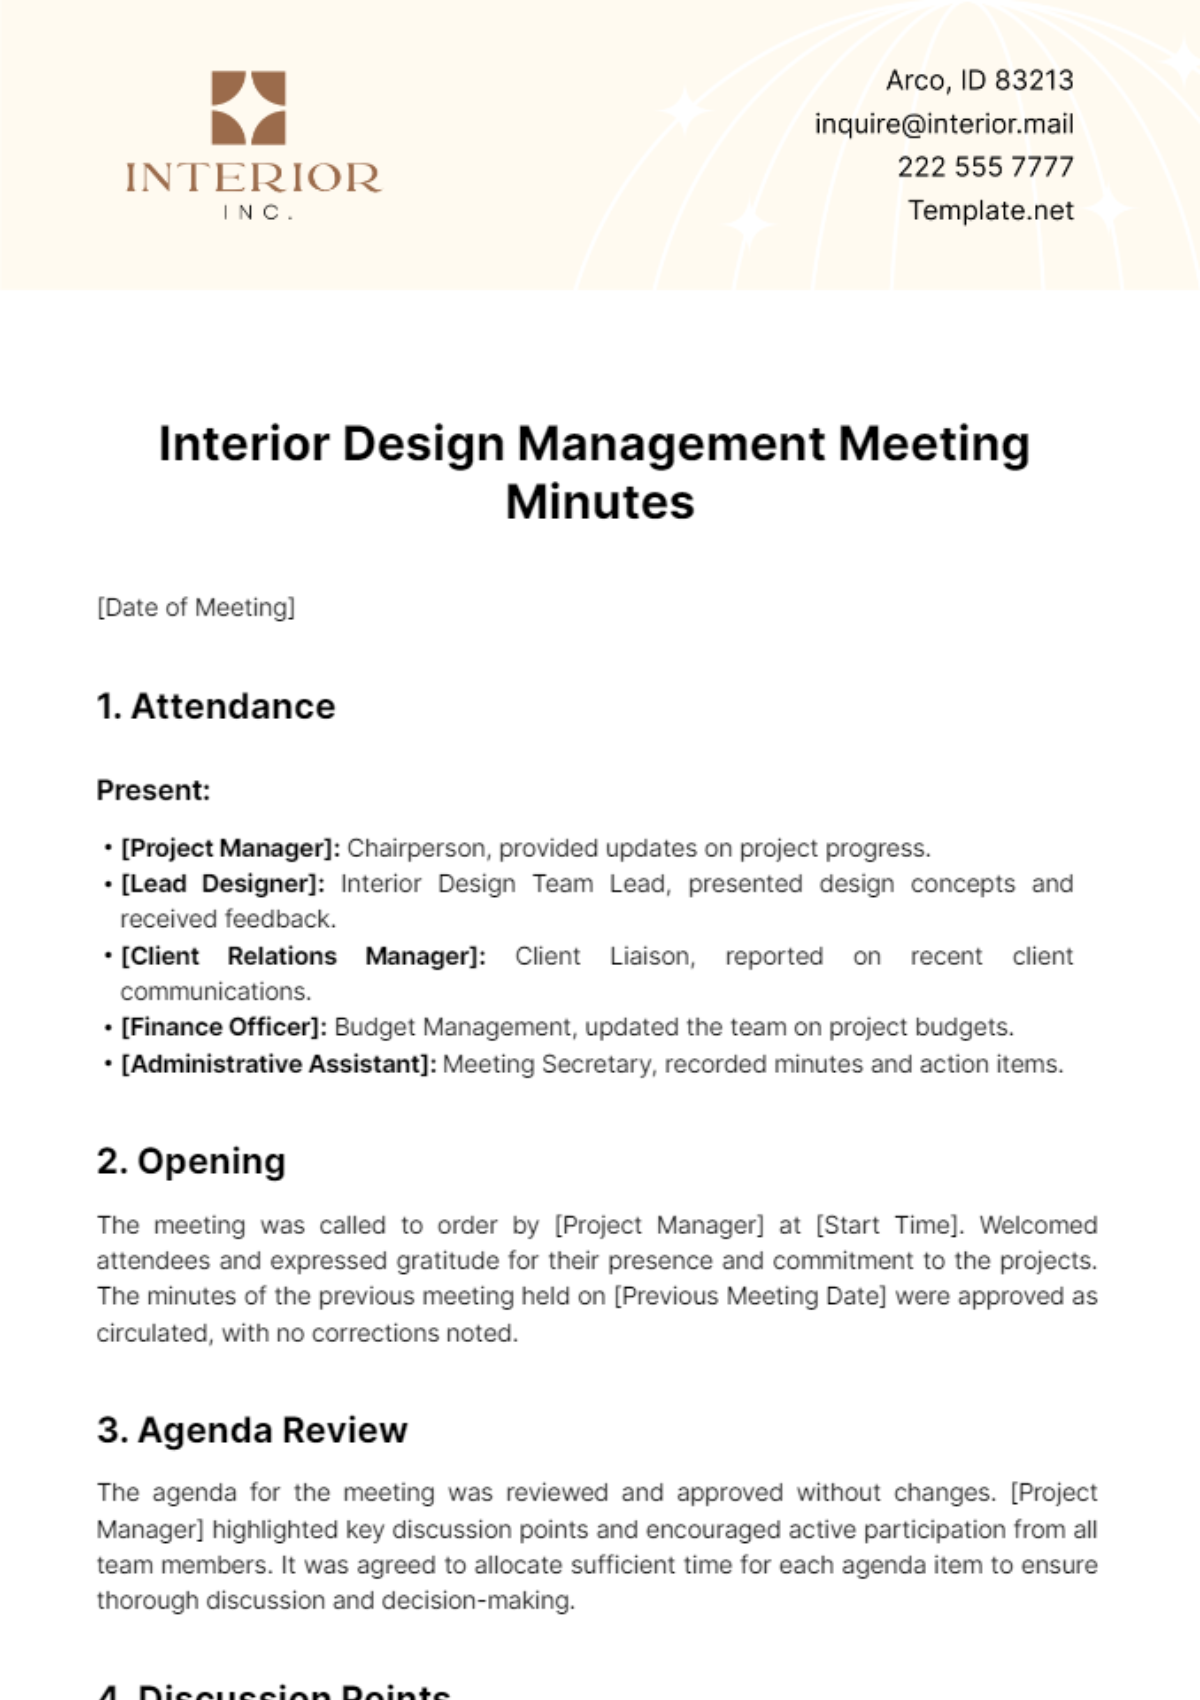 Interior Design Management Meeting Minutes Template